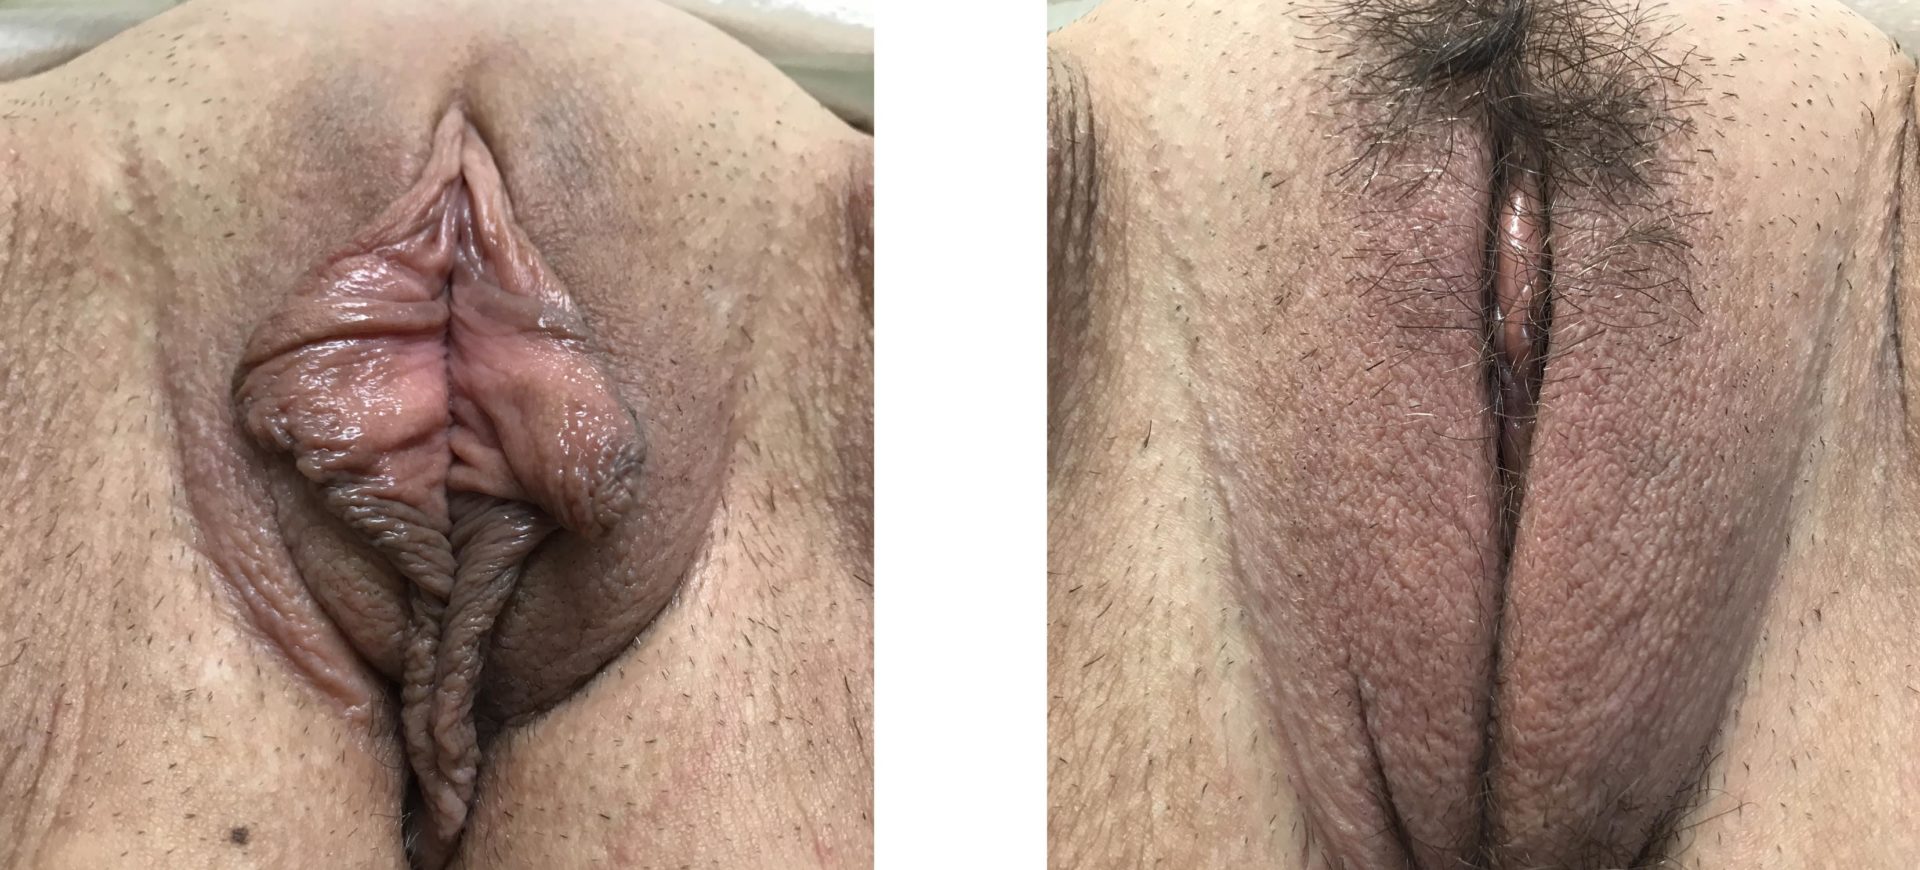 Vaginoplasty and Labiaplasty Minora